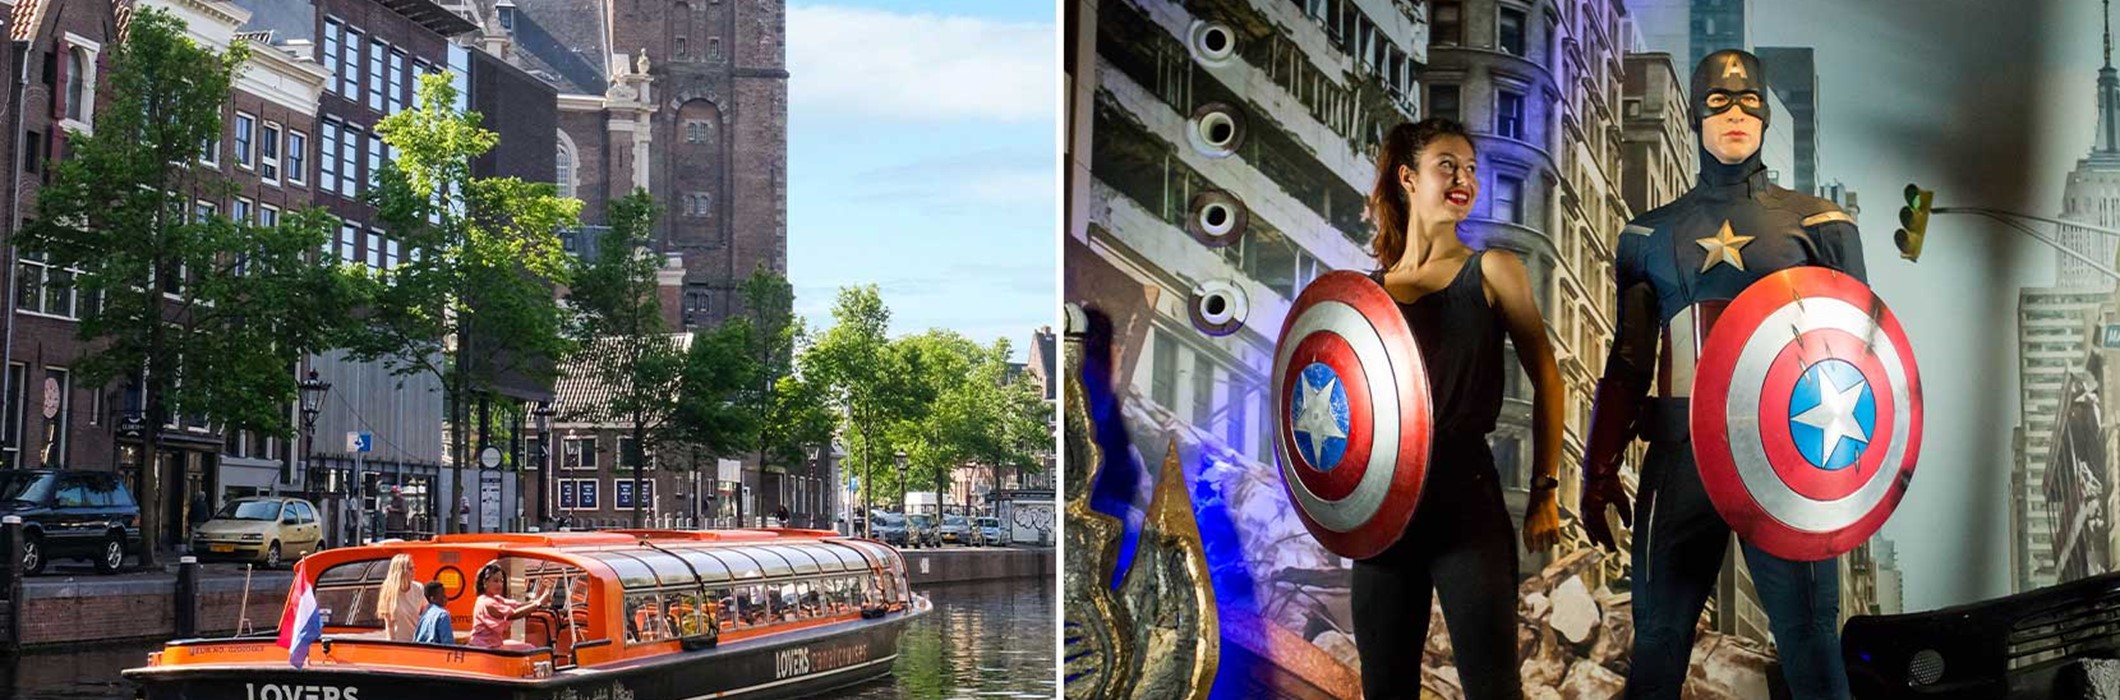 Madame Tussauds + Amsterdam Canal Cruise